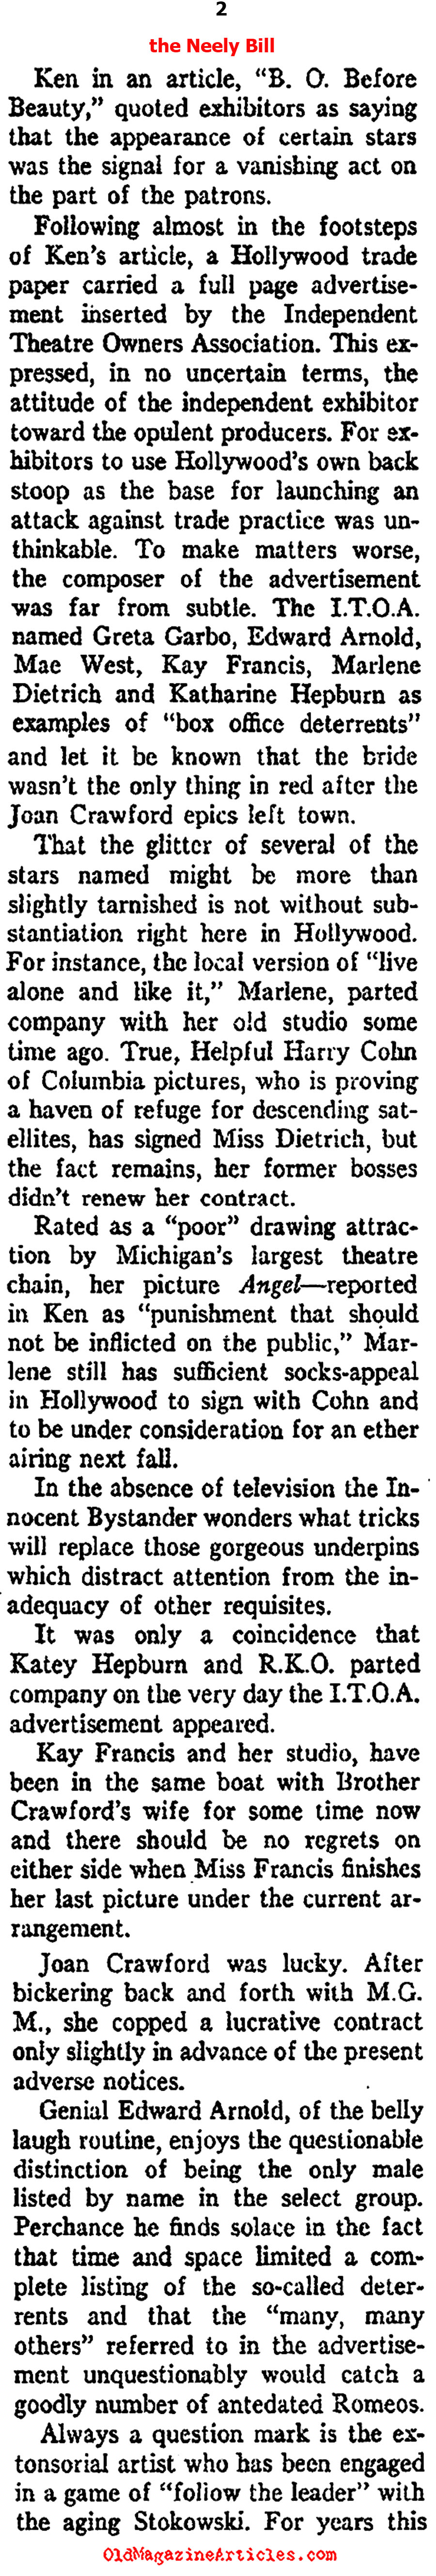 Movie Exhibitors vs Movie Producers (Ken Magazine, 1938)